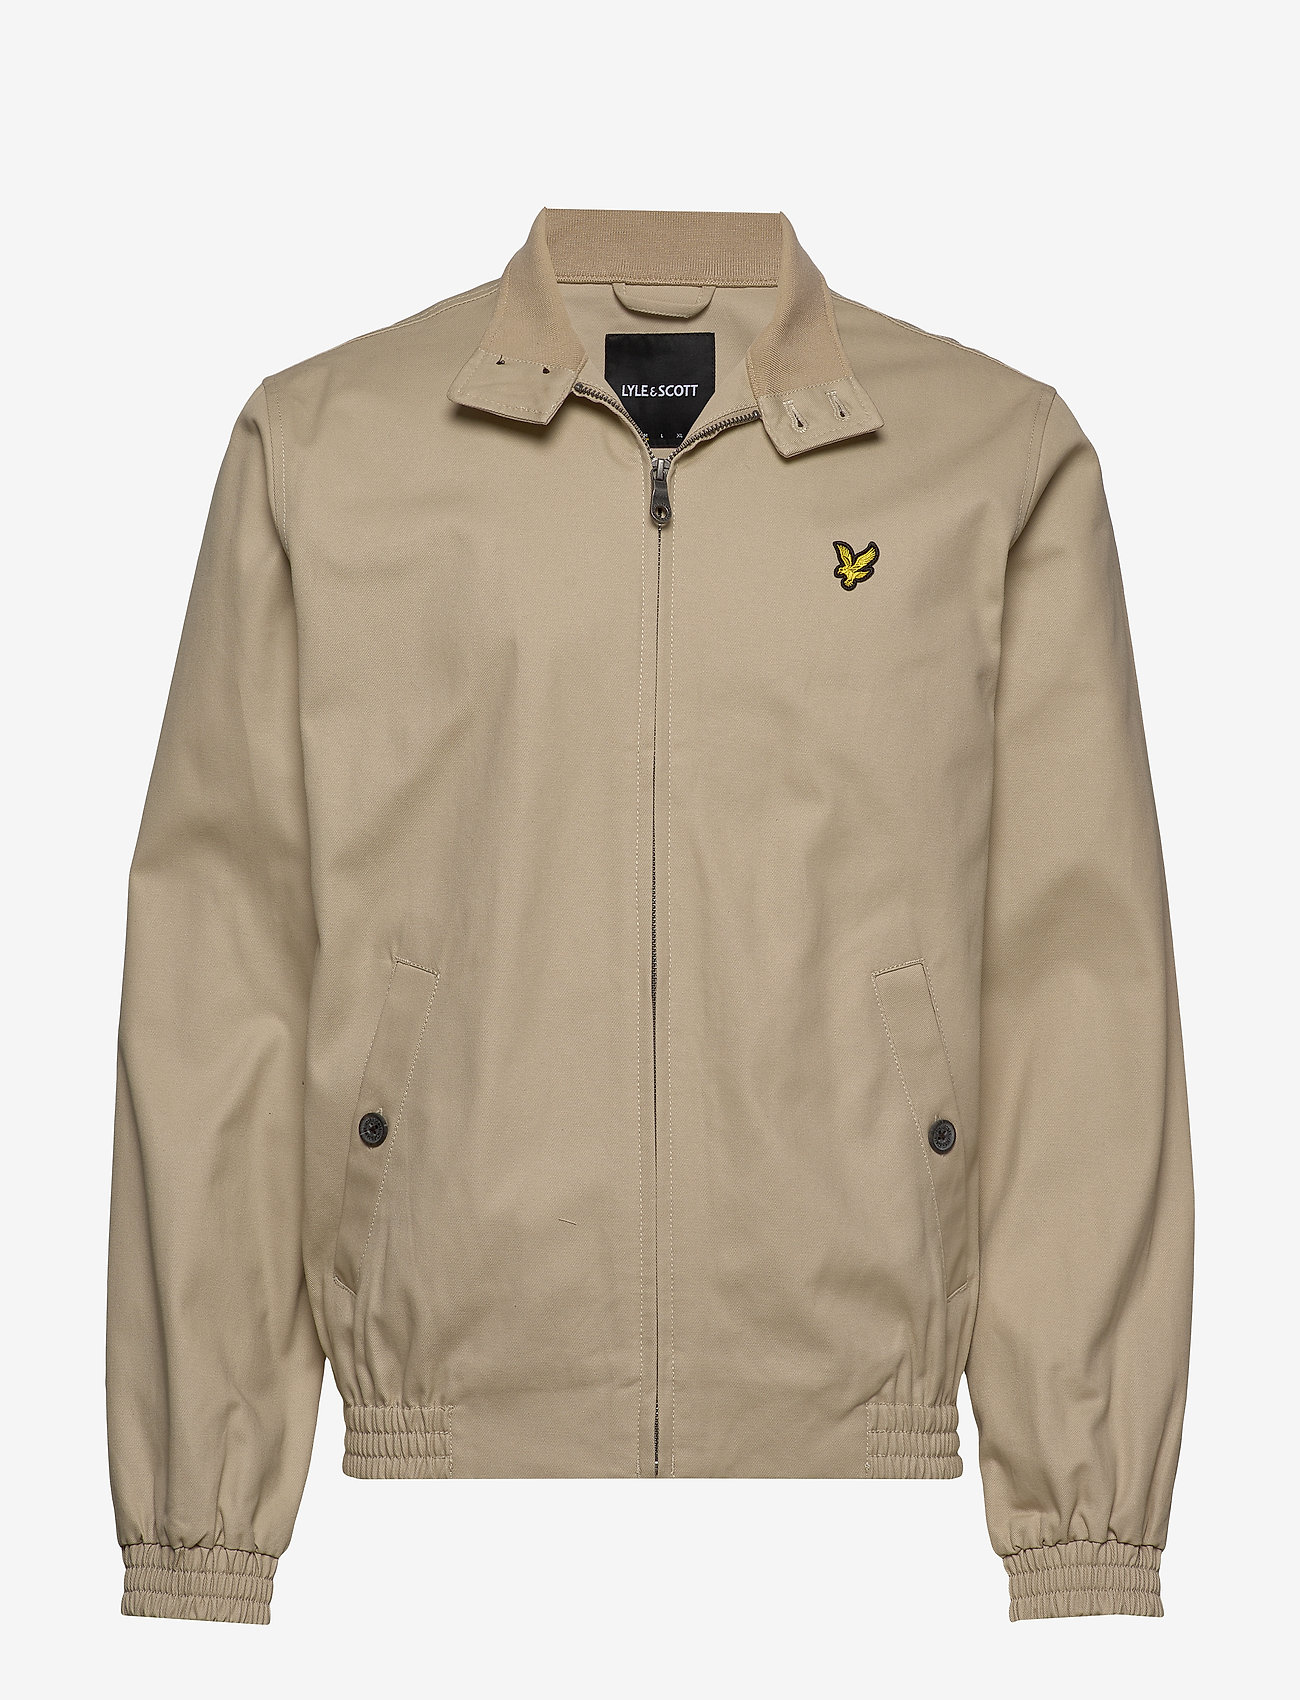 Lyle & Scott - Harrington jacket - spring jackets - stone - 0